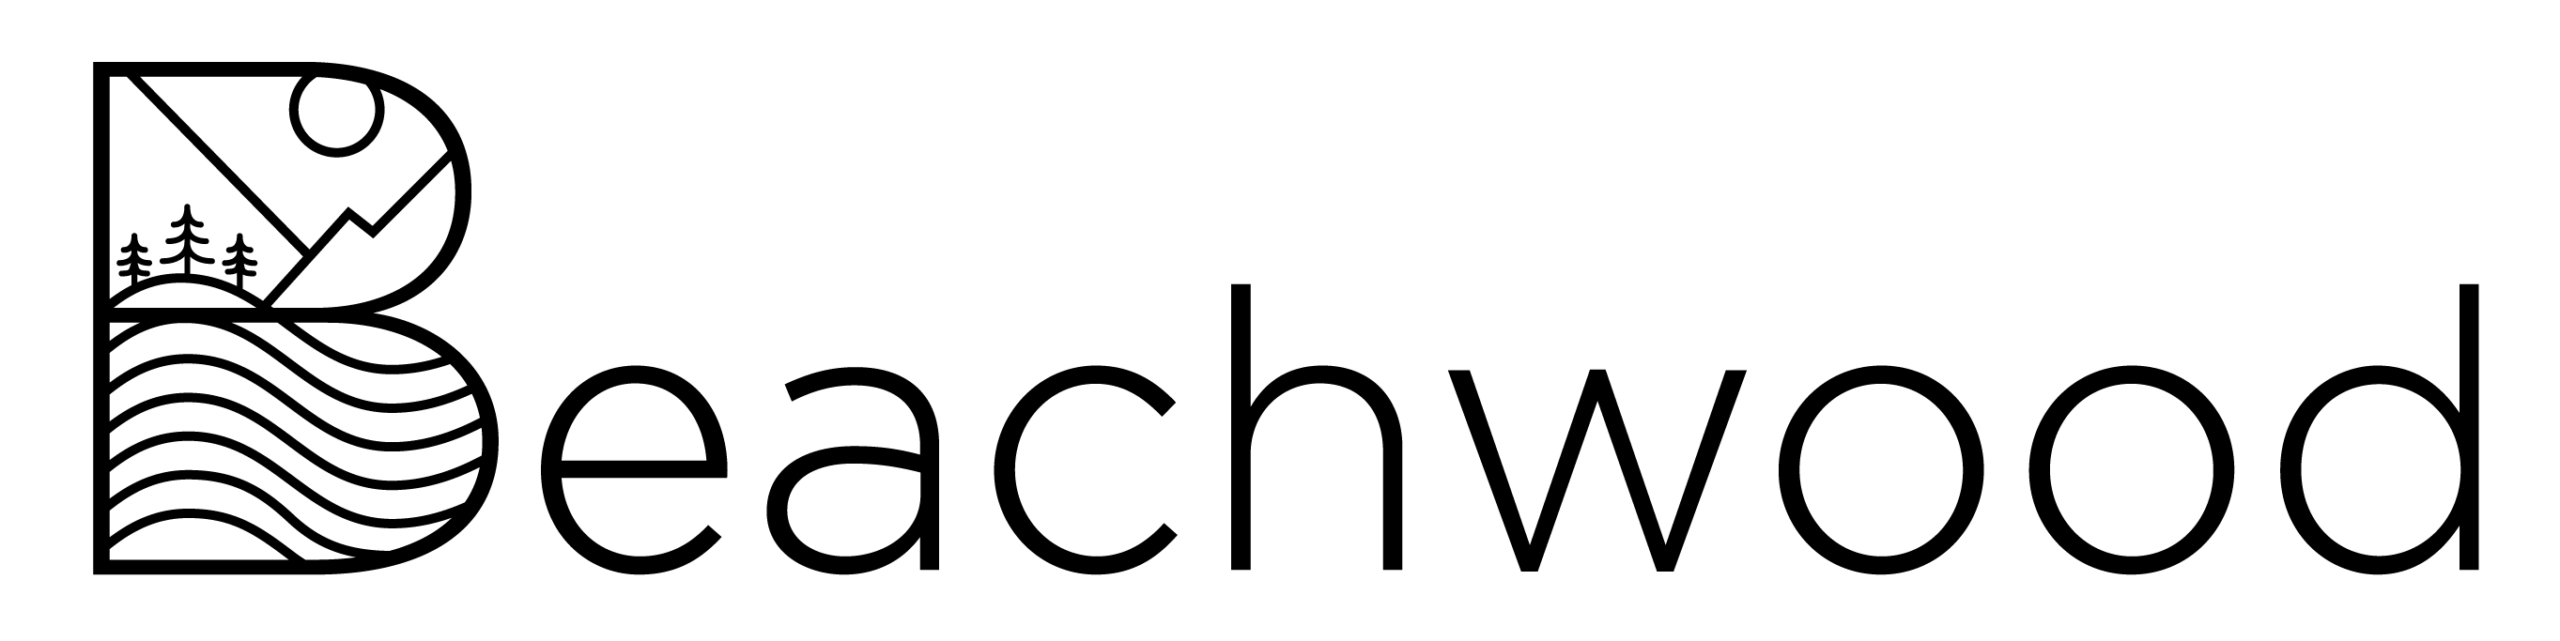 property-logo